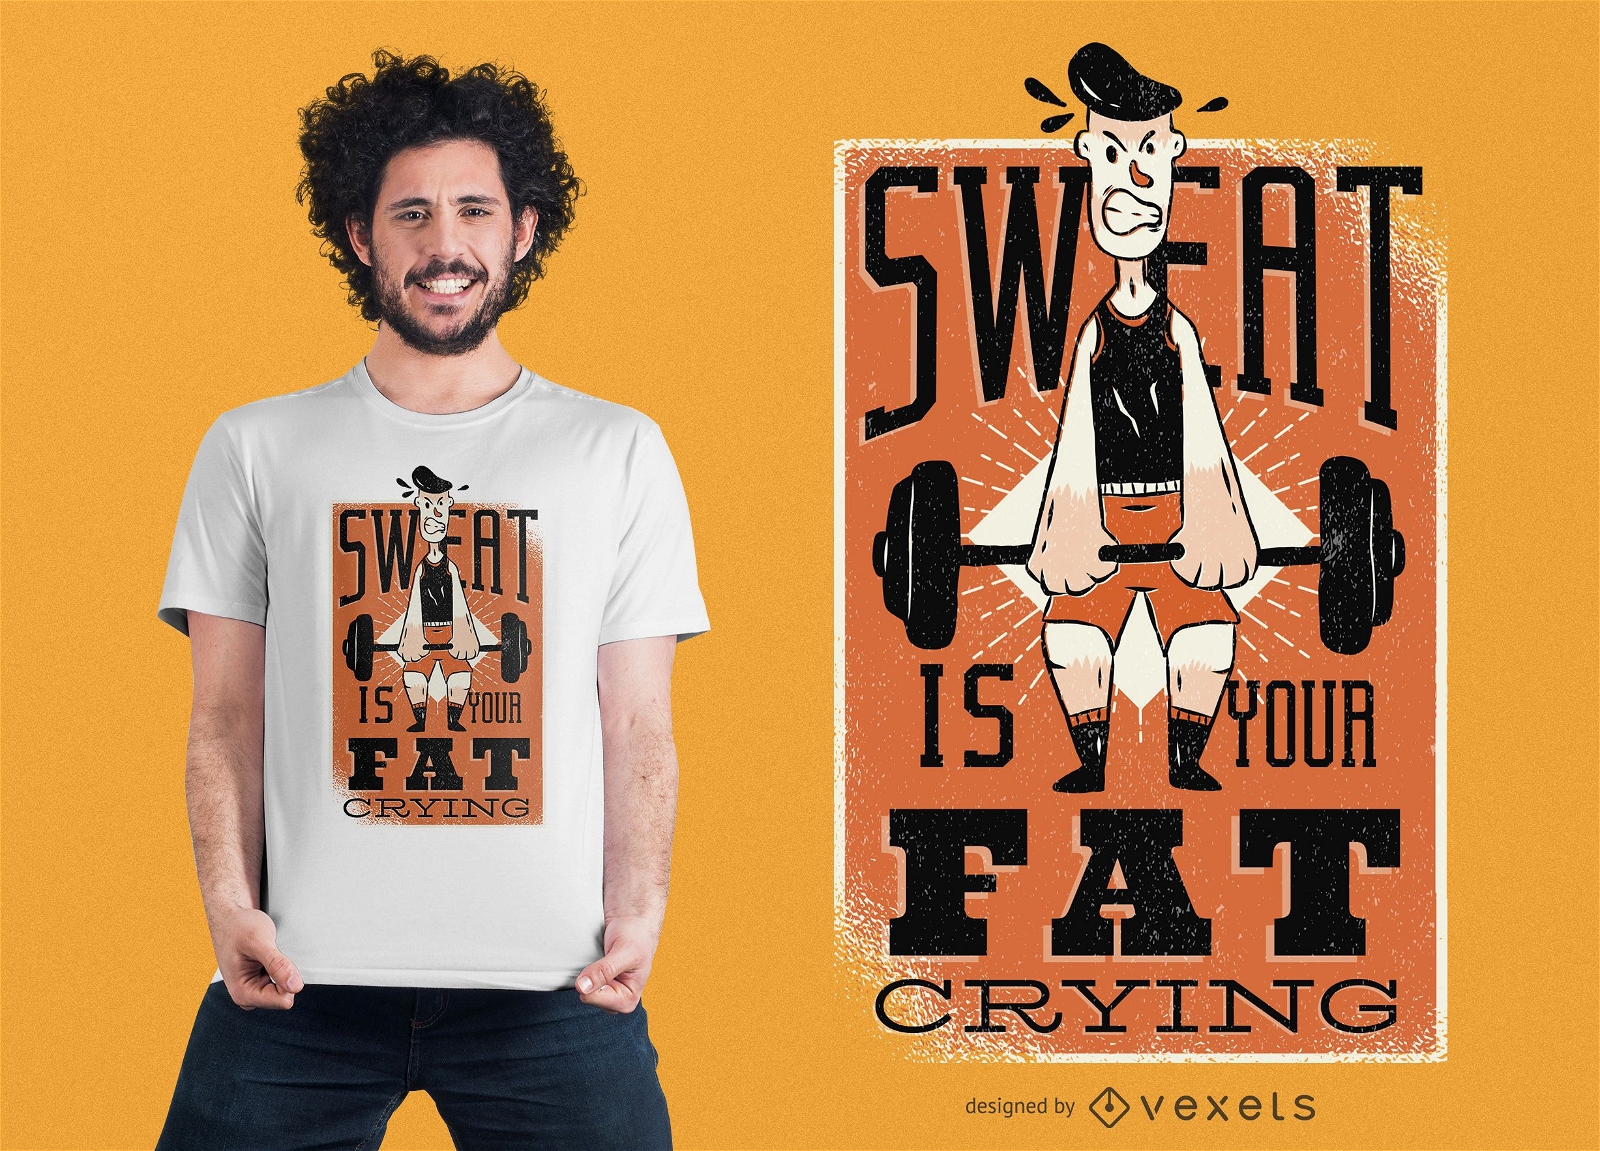 Sweat quote t-shirt design